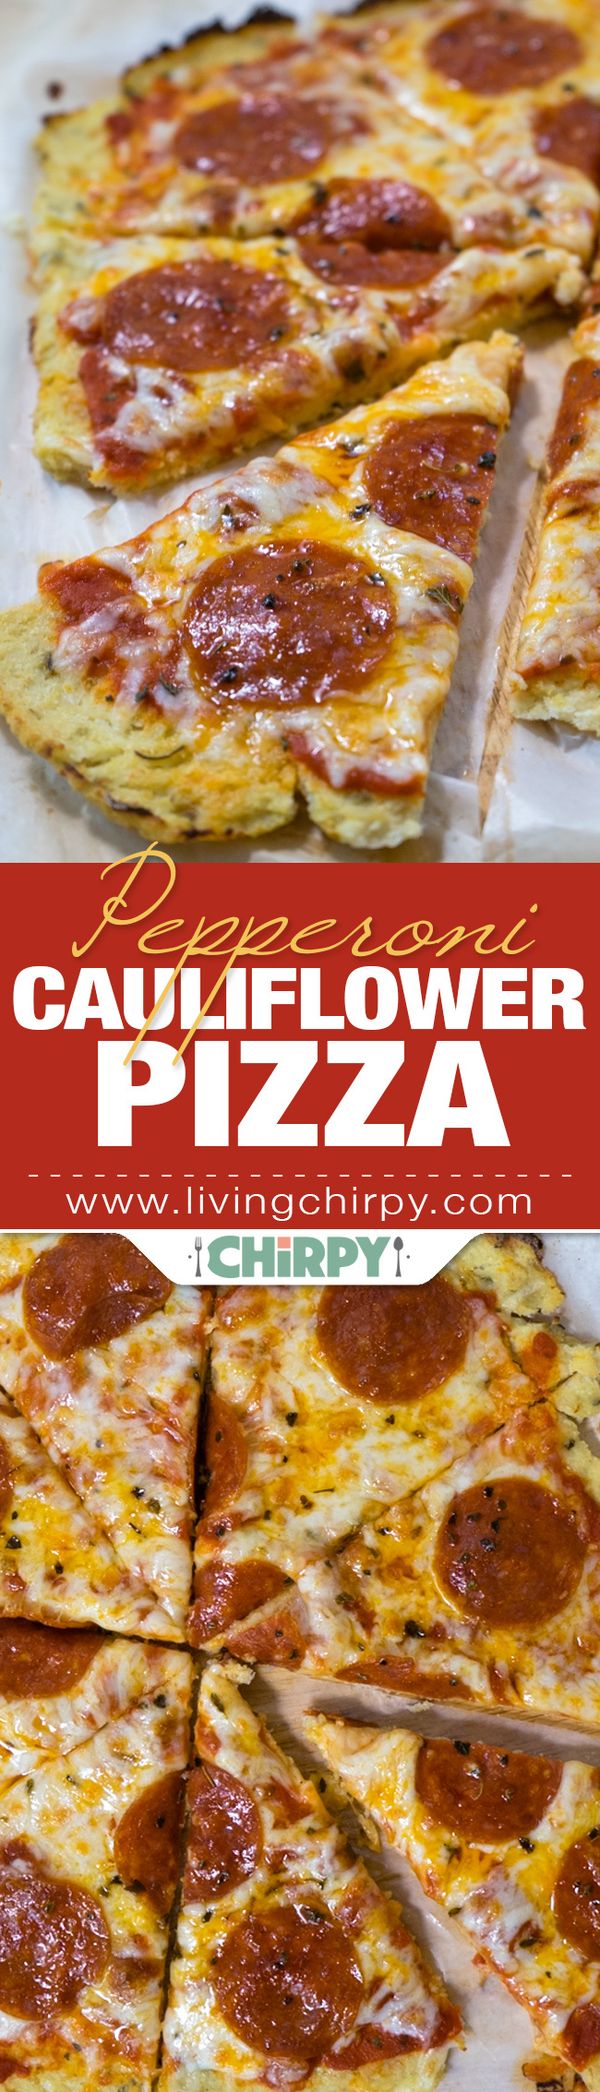 Pepperoni Cauliflower Pizza